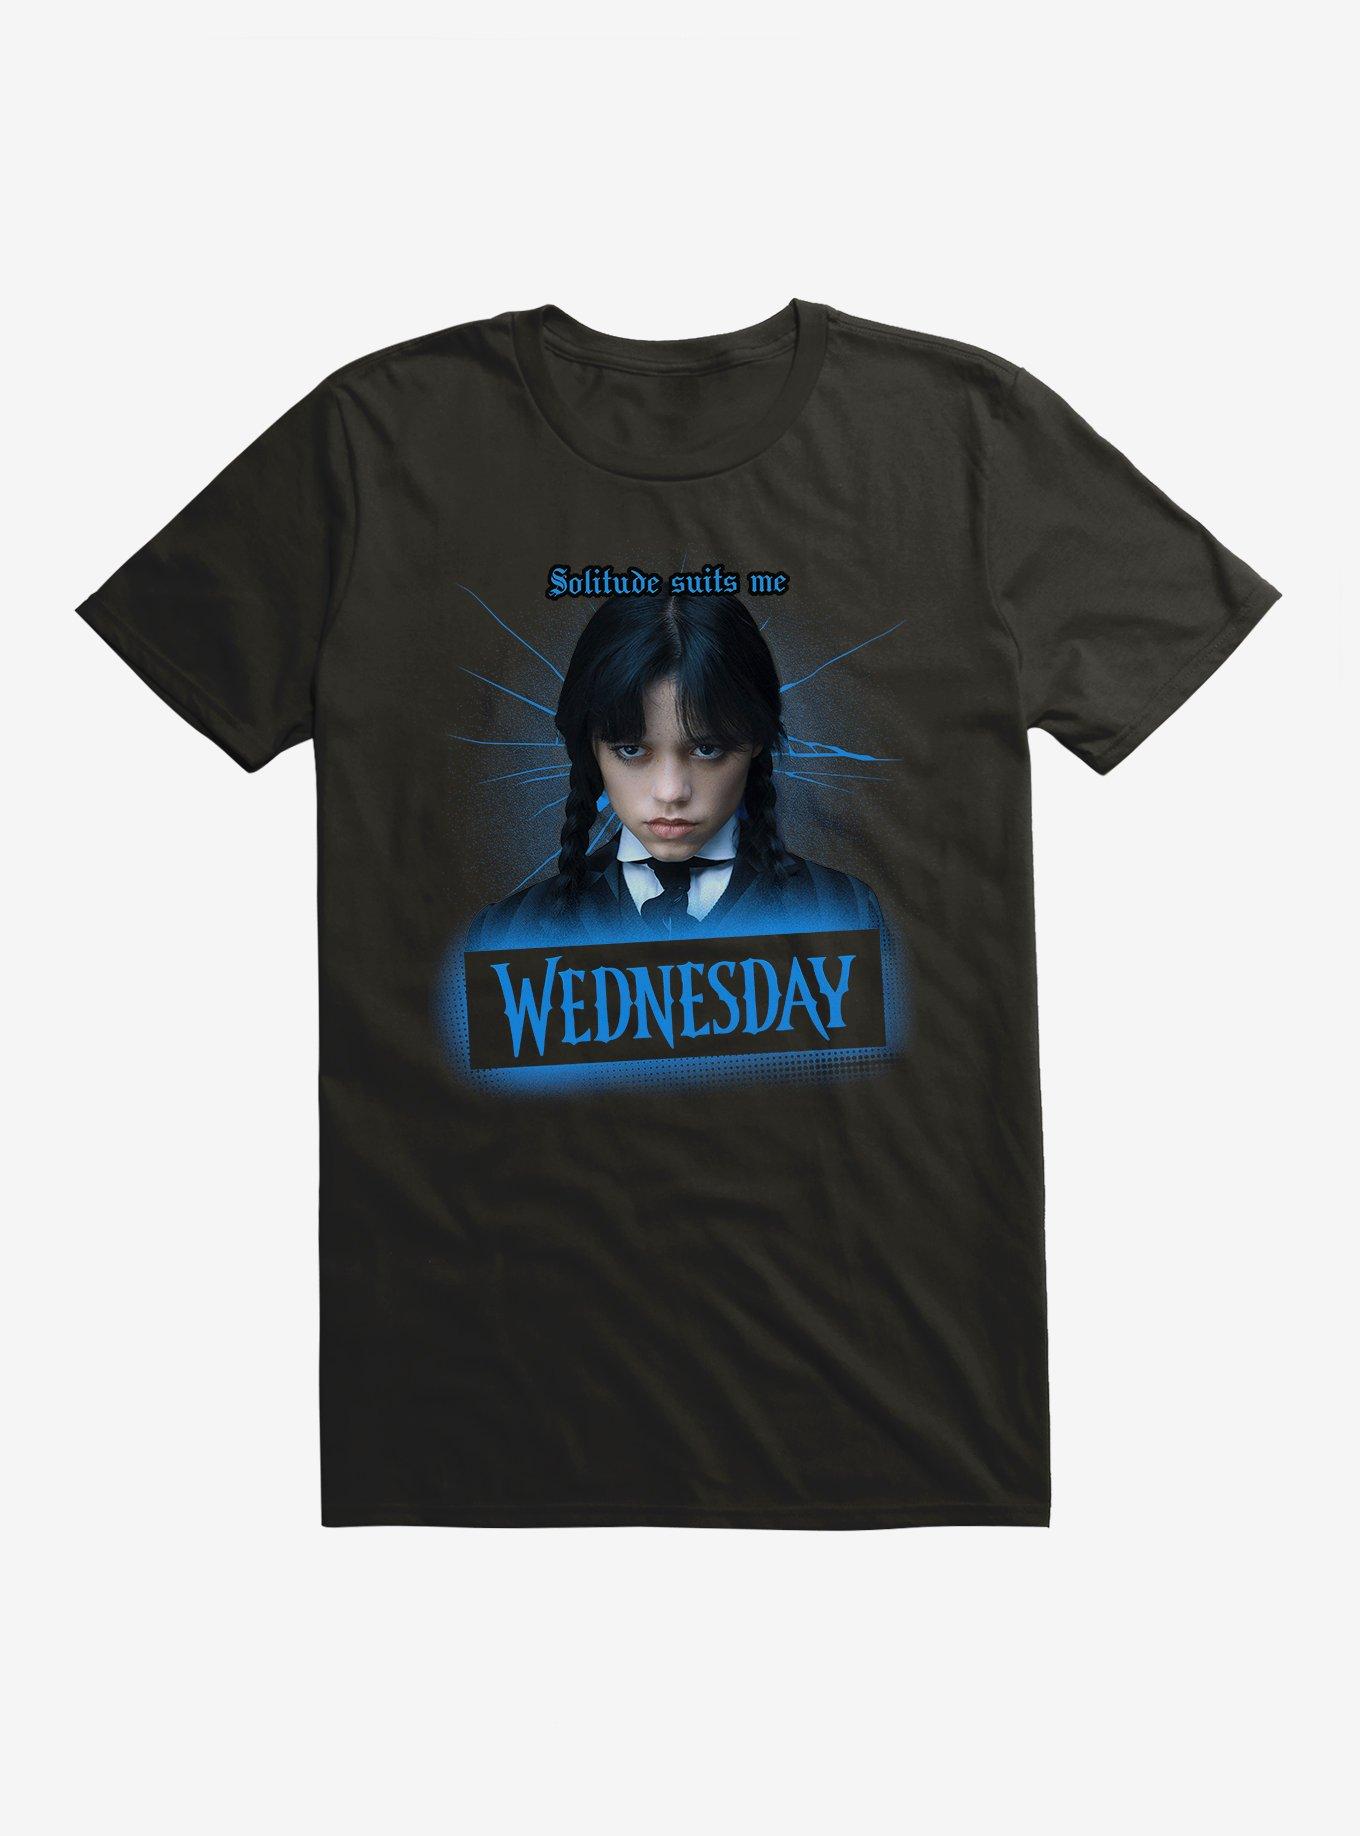 Wednesday Solitude Suits Me T-Shirt, BLACK, hi-res